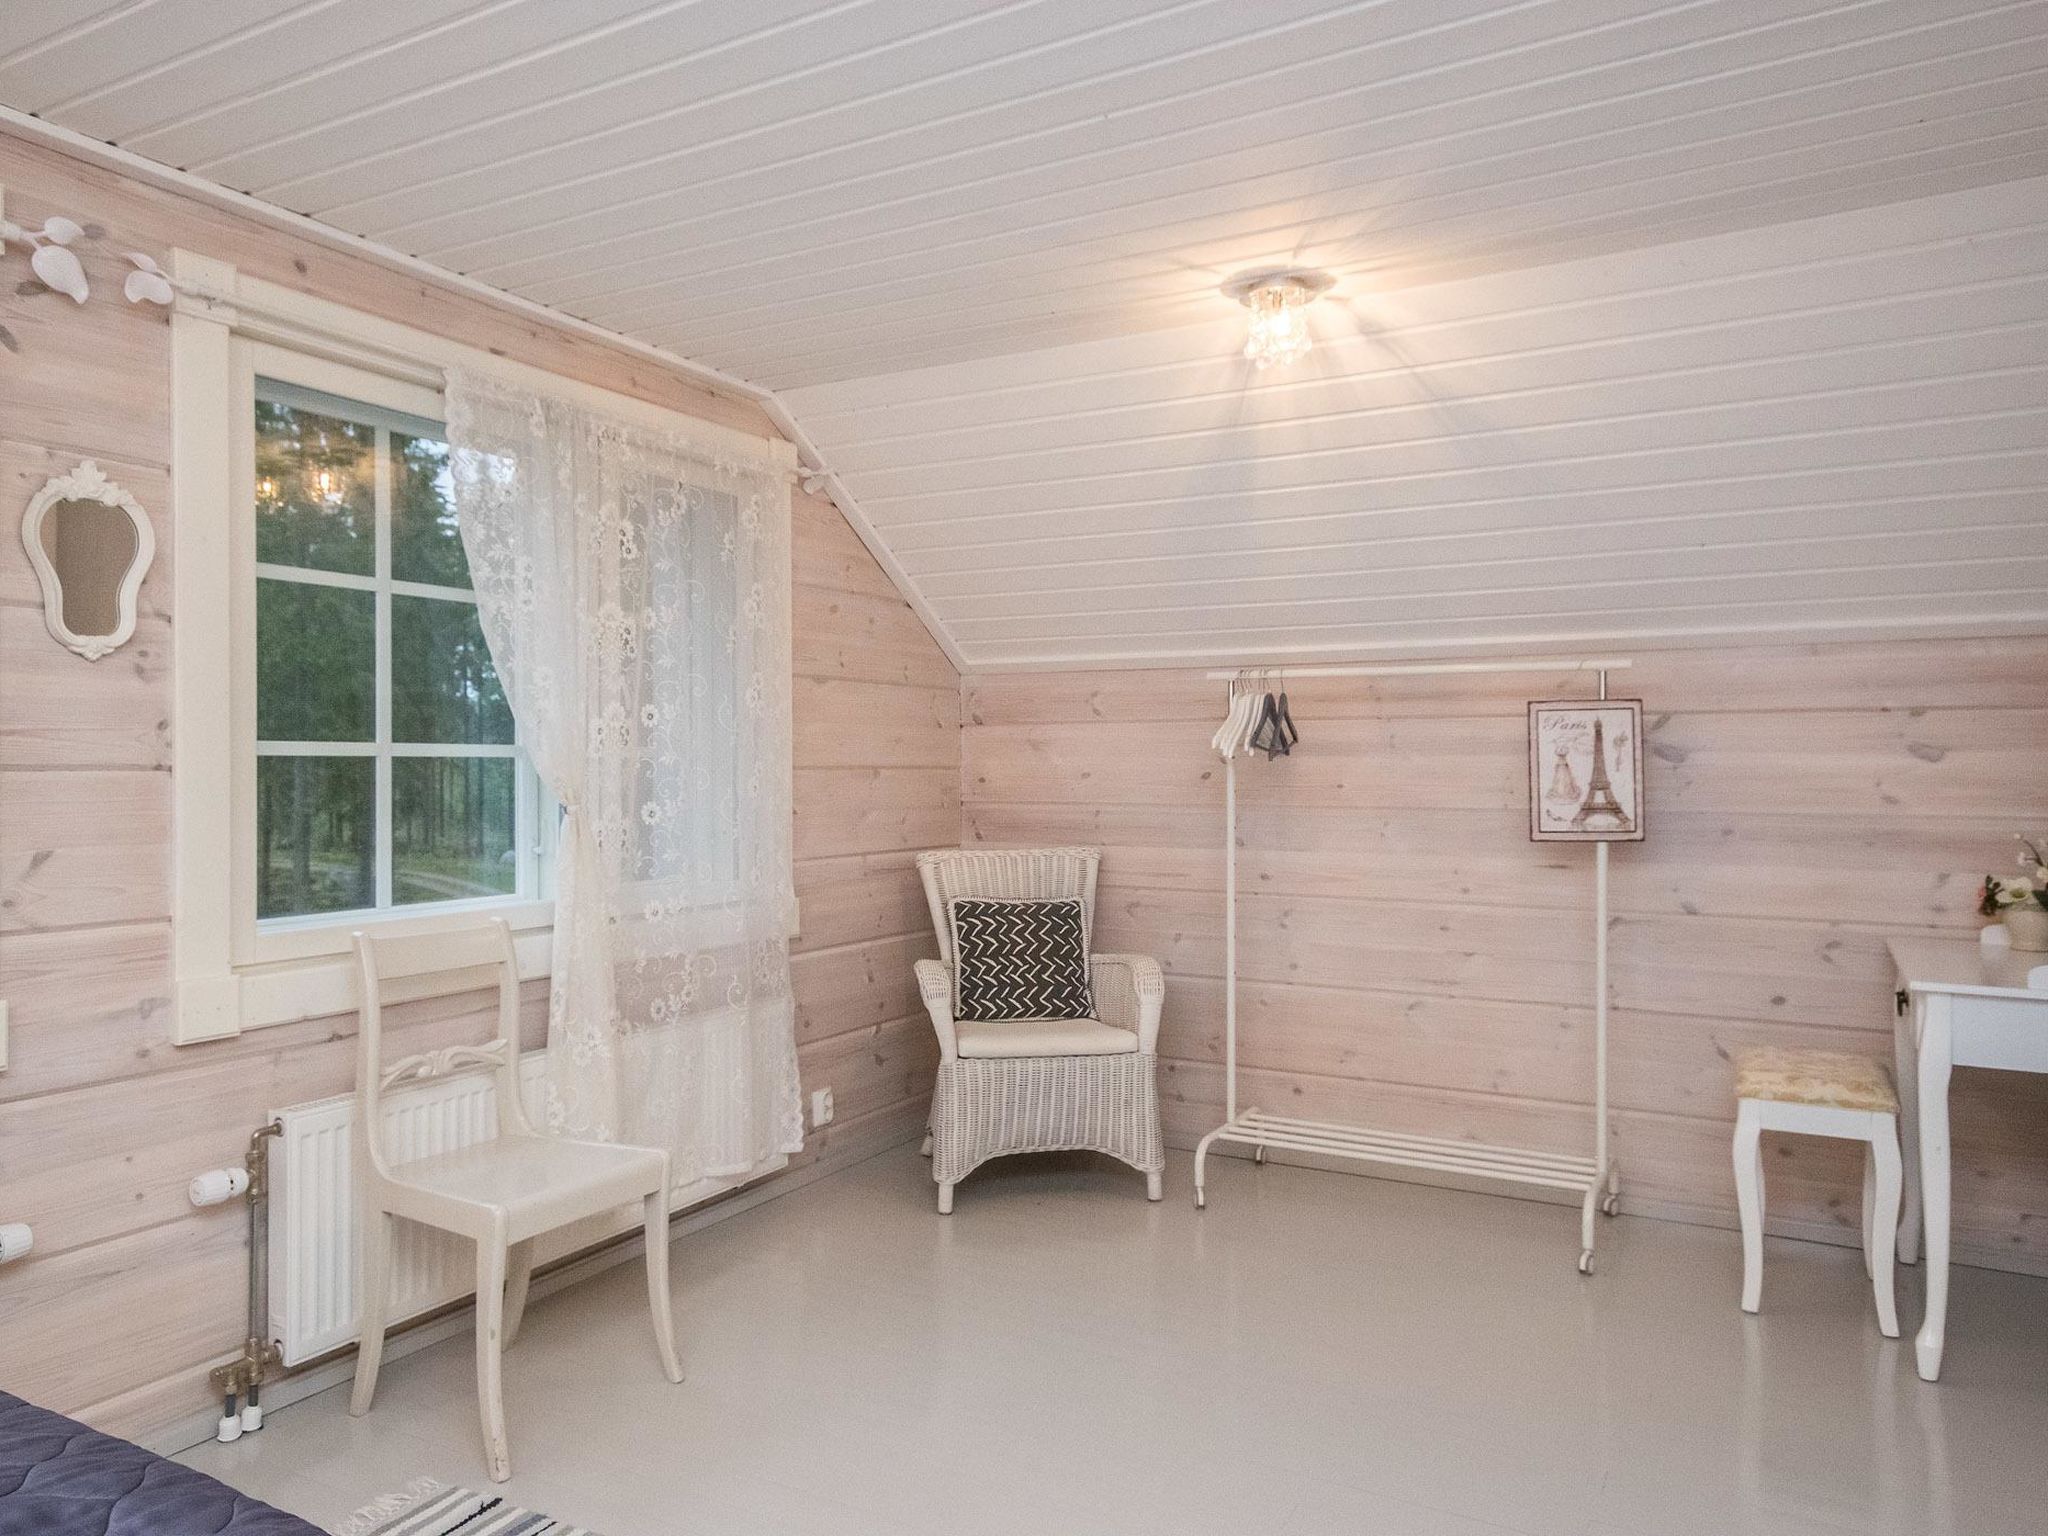 Photo 19 - 4 bedroom House in Savonlinna with sauna